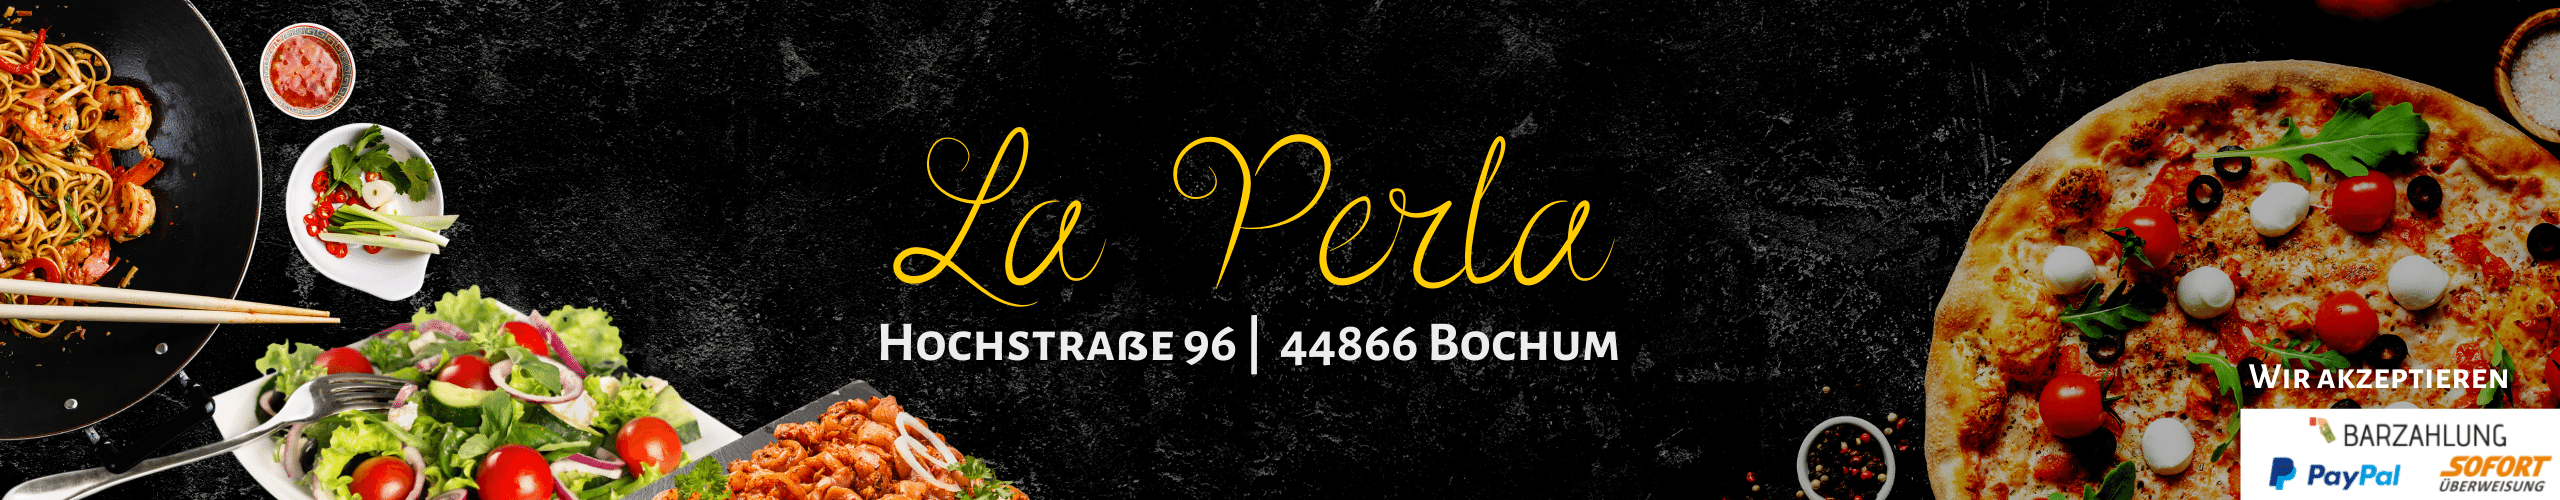 Pizzeria La Perla – Hochstrasse 96 – 44866 Bochum